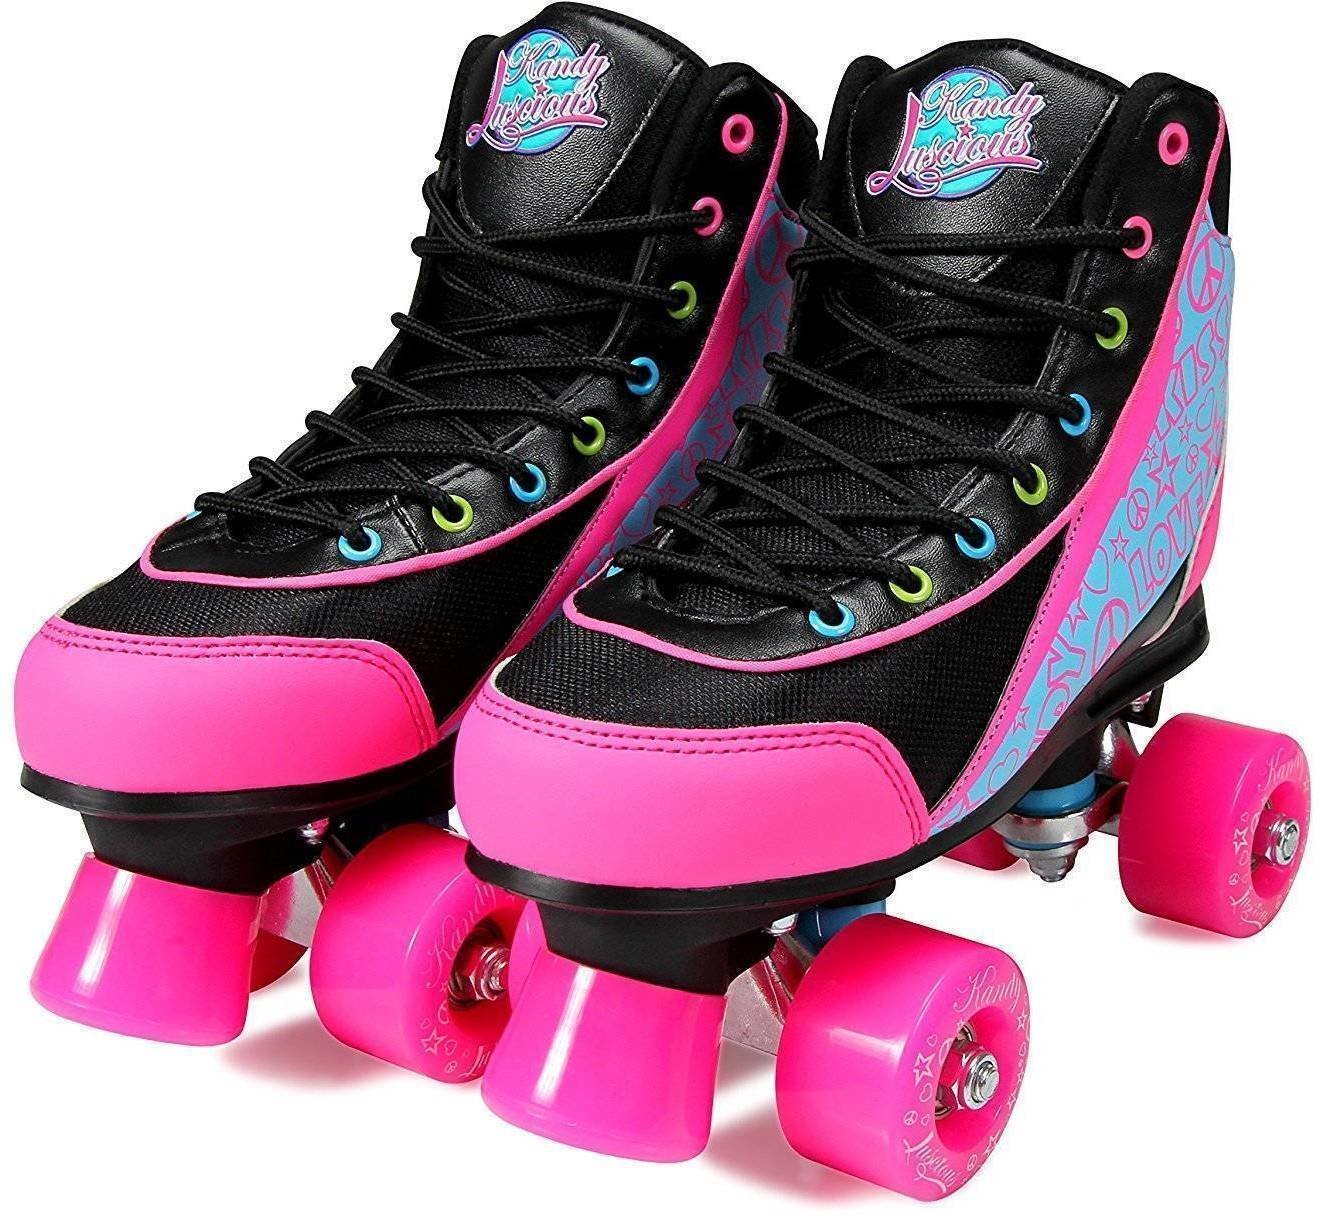 Kolečkové brusle Luscious Skates Disco Diva 34 Black/Pink